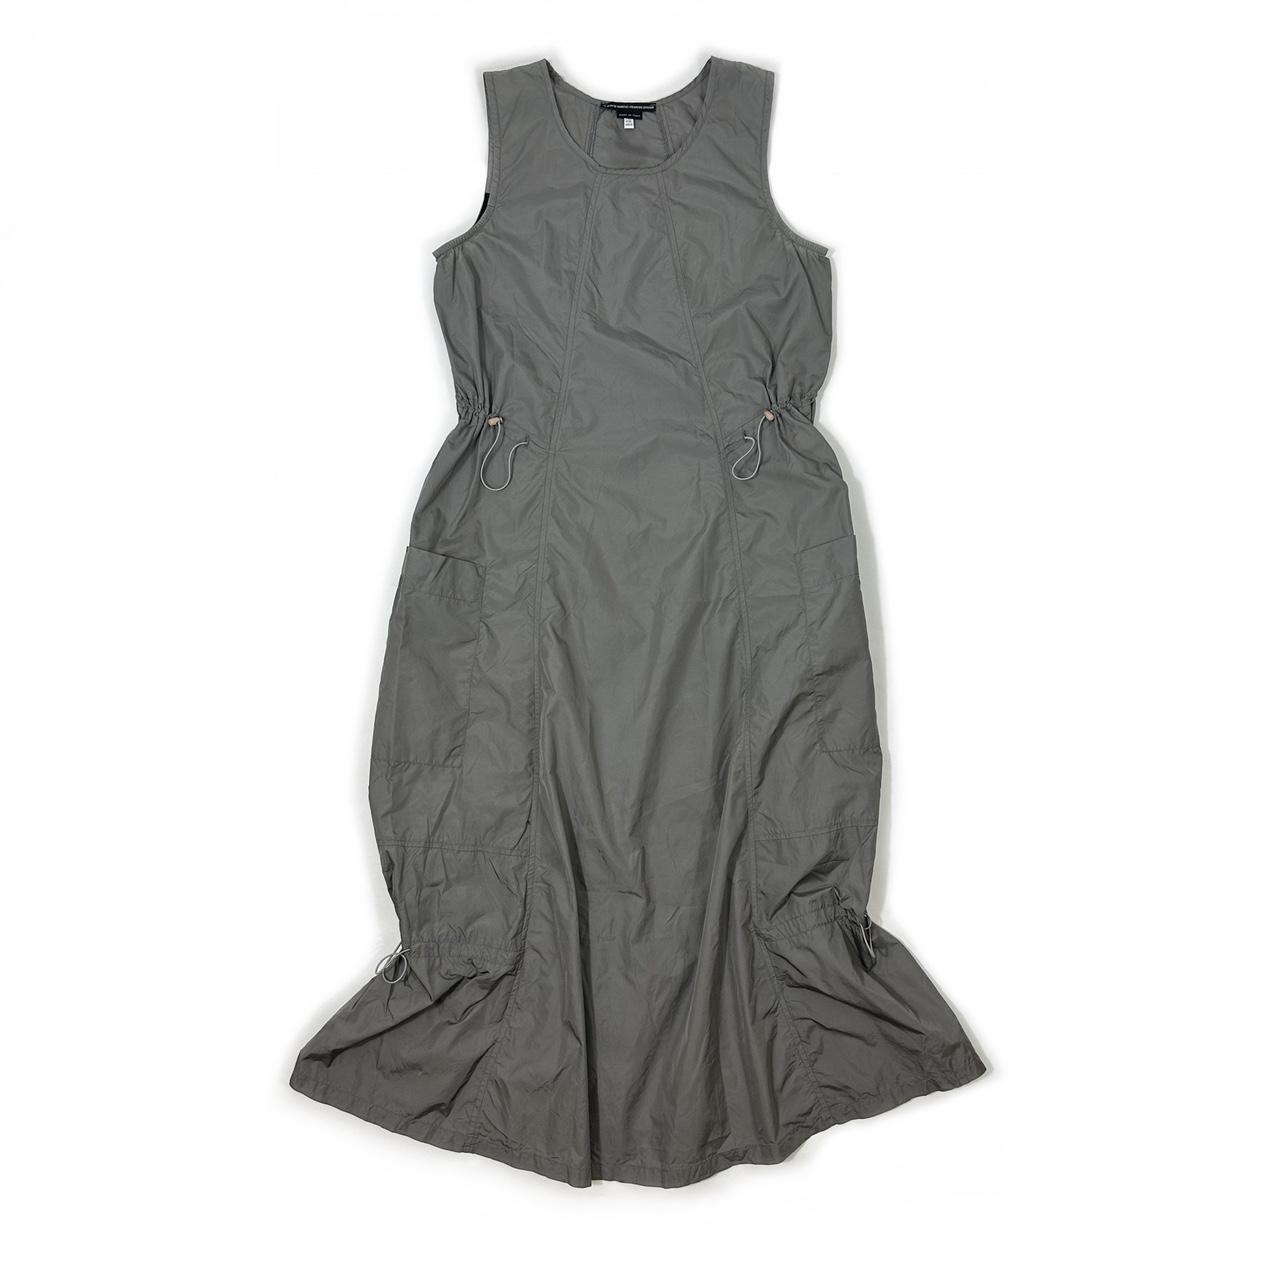 Marithe Francois Girbaud grey parachute tank dress,... - Depop